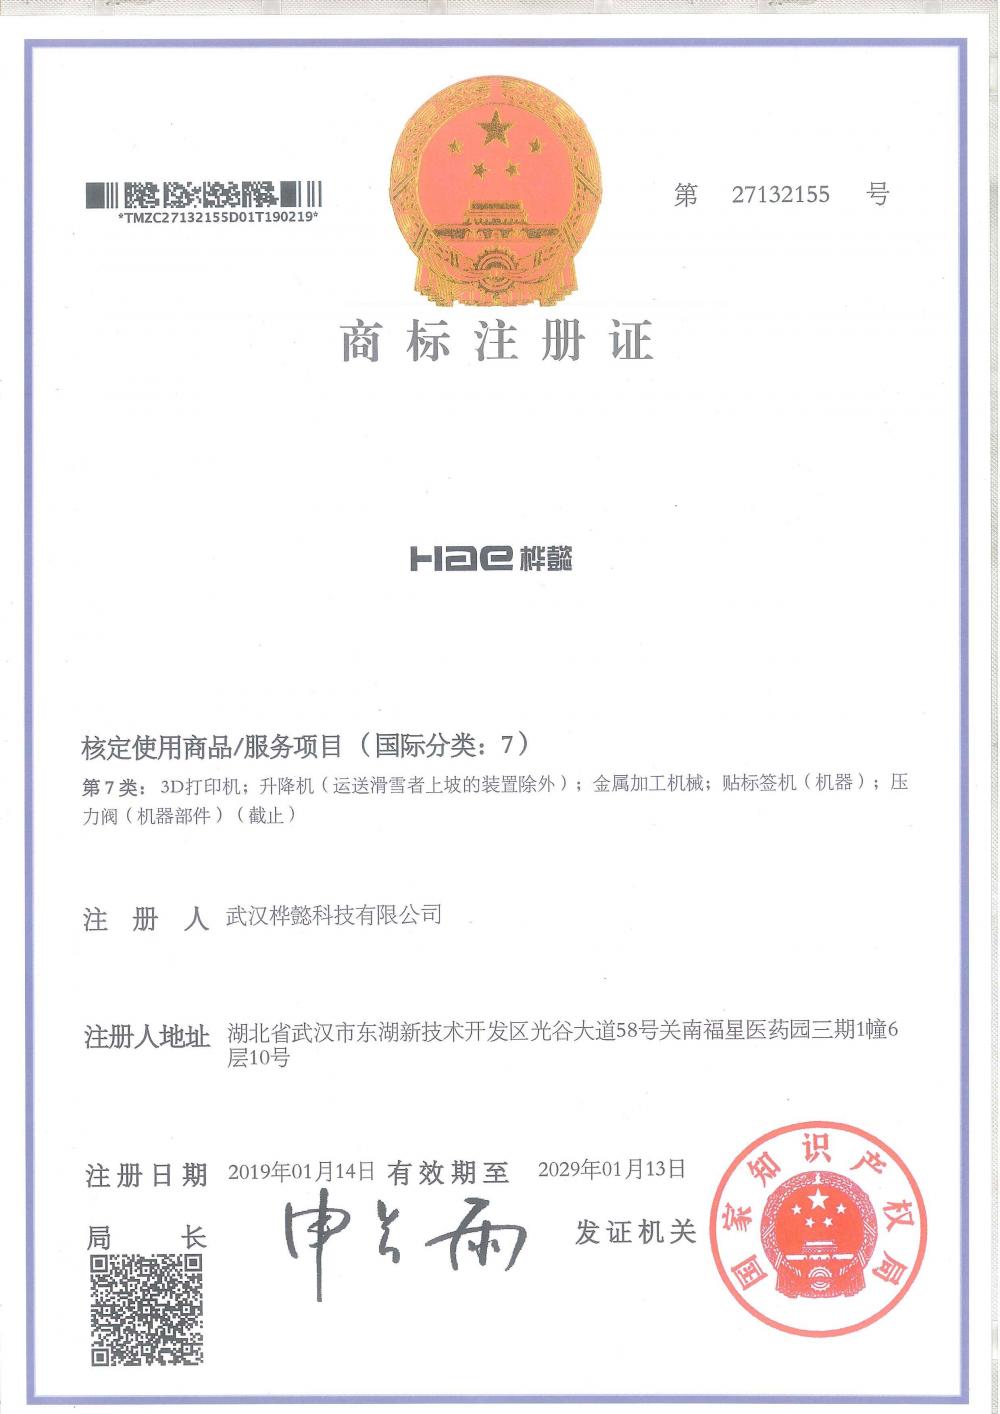 Registered trademark certificate